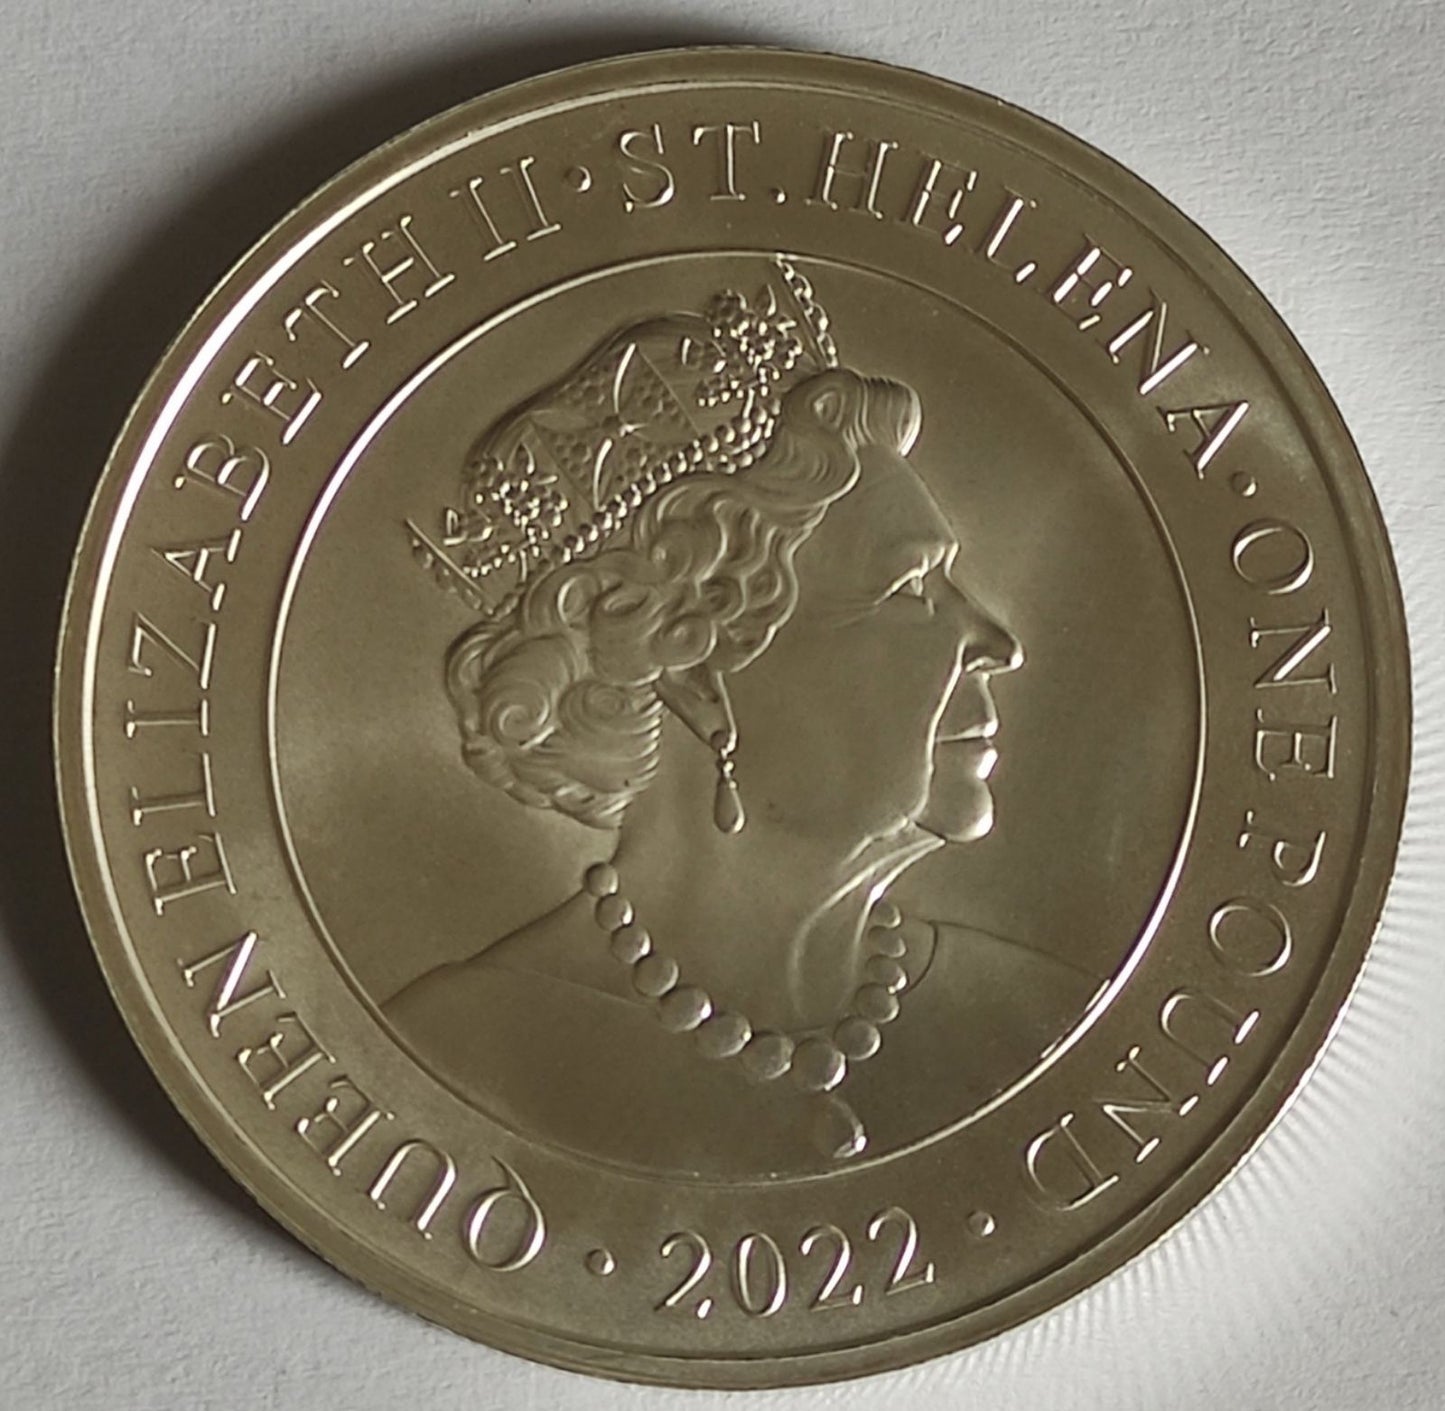 2022 St. Helena British Trade Dollar 1 oz Silver Coin BU in Capsule